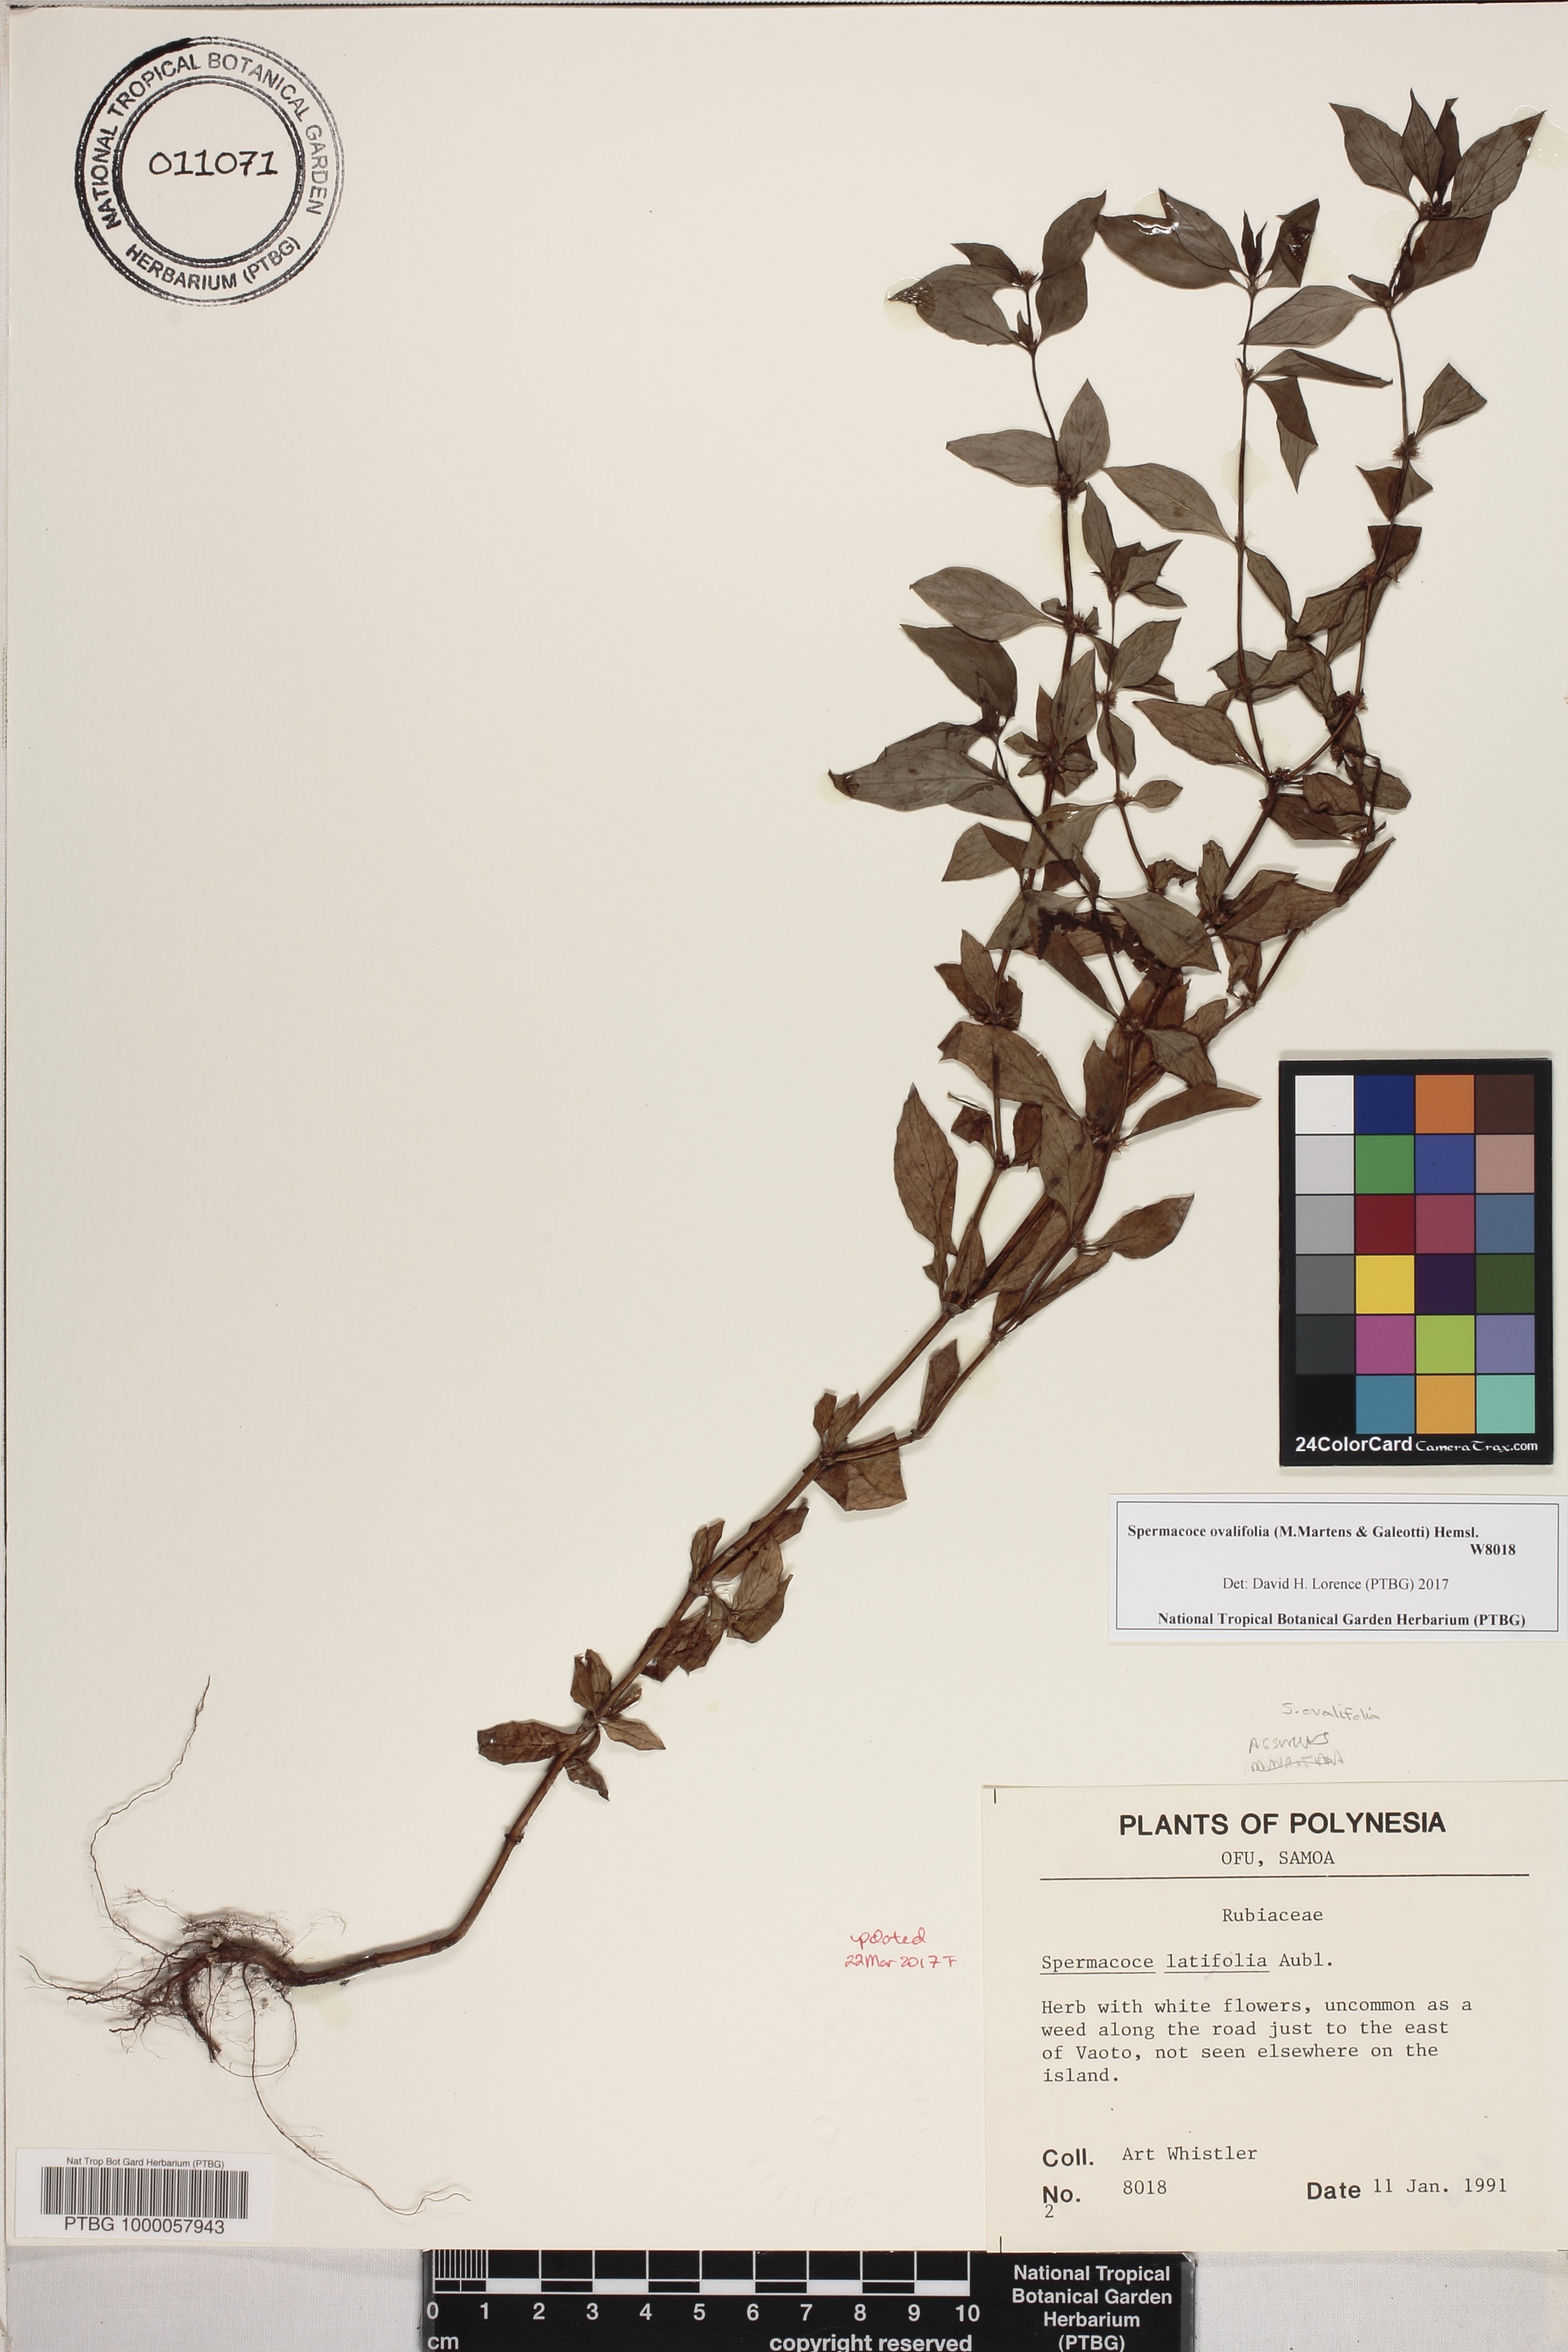 Spermacoce ovalifolia image